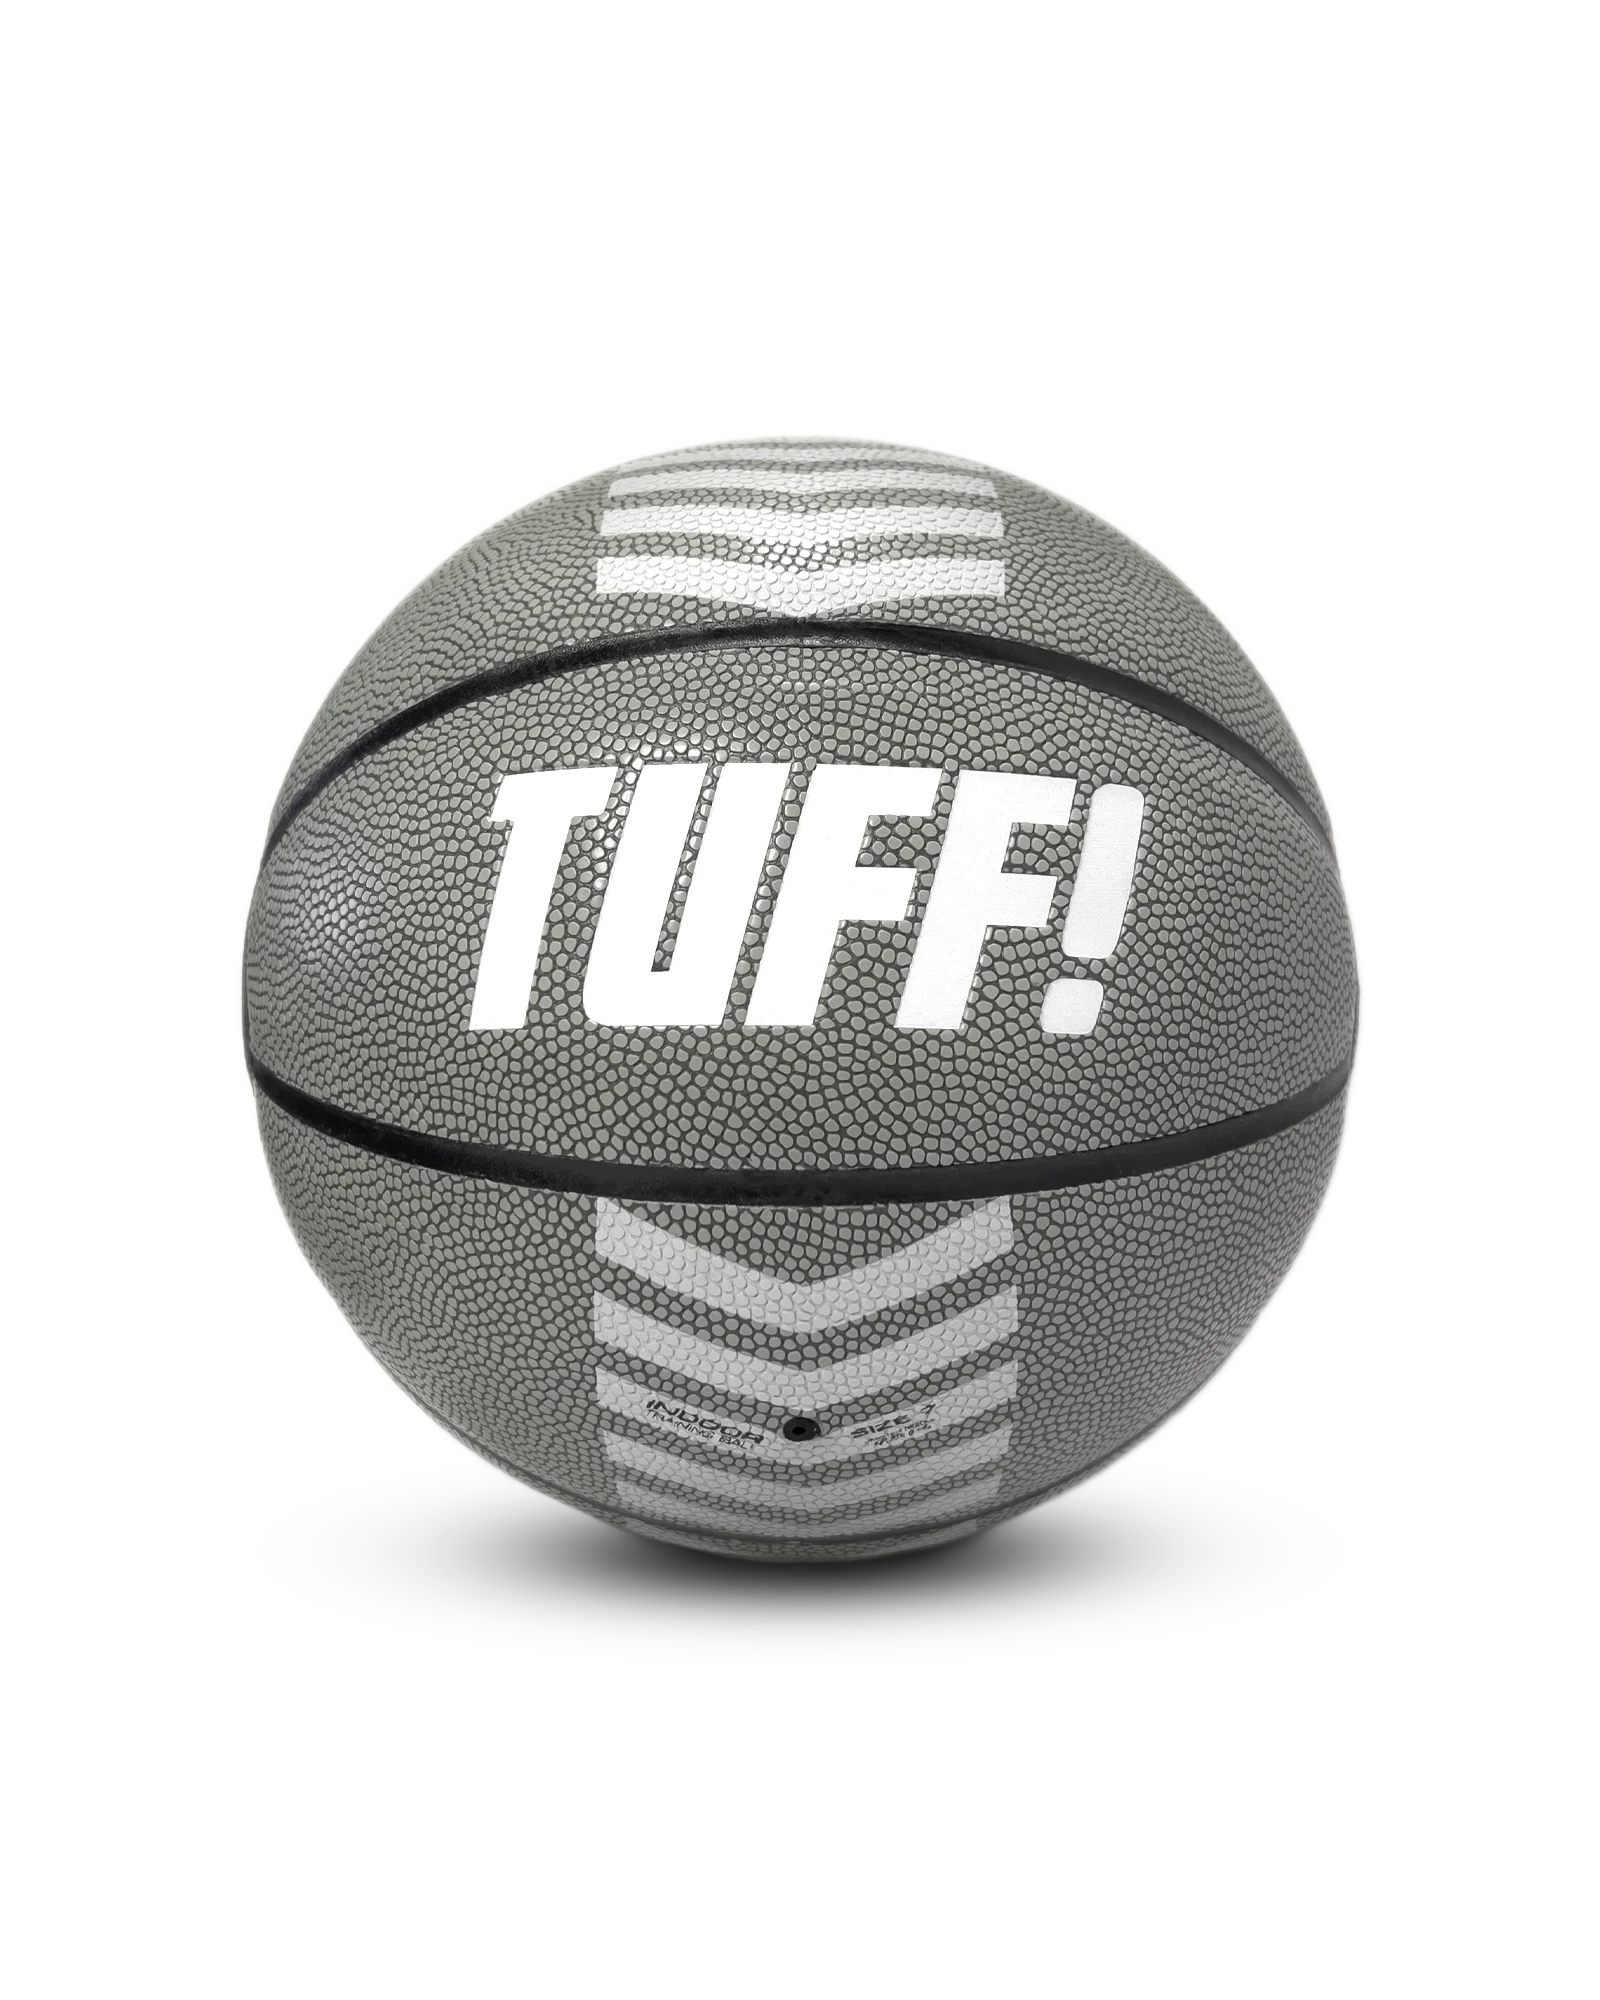 TUFF! TRAINING BASKETBALL – TUFF! Athletic Supply